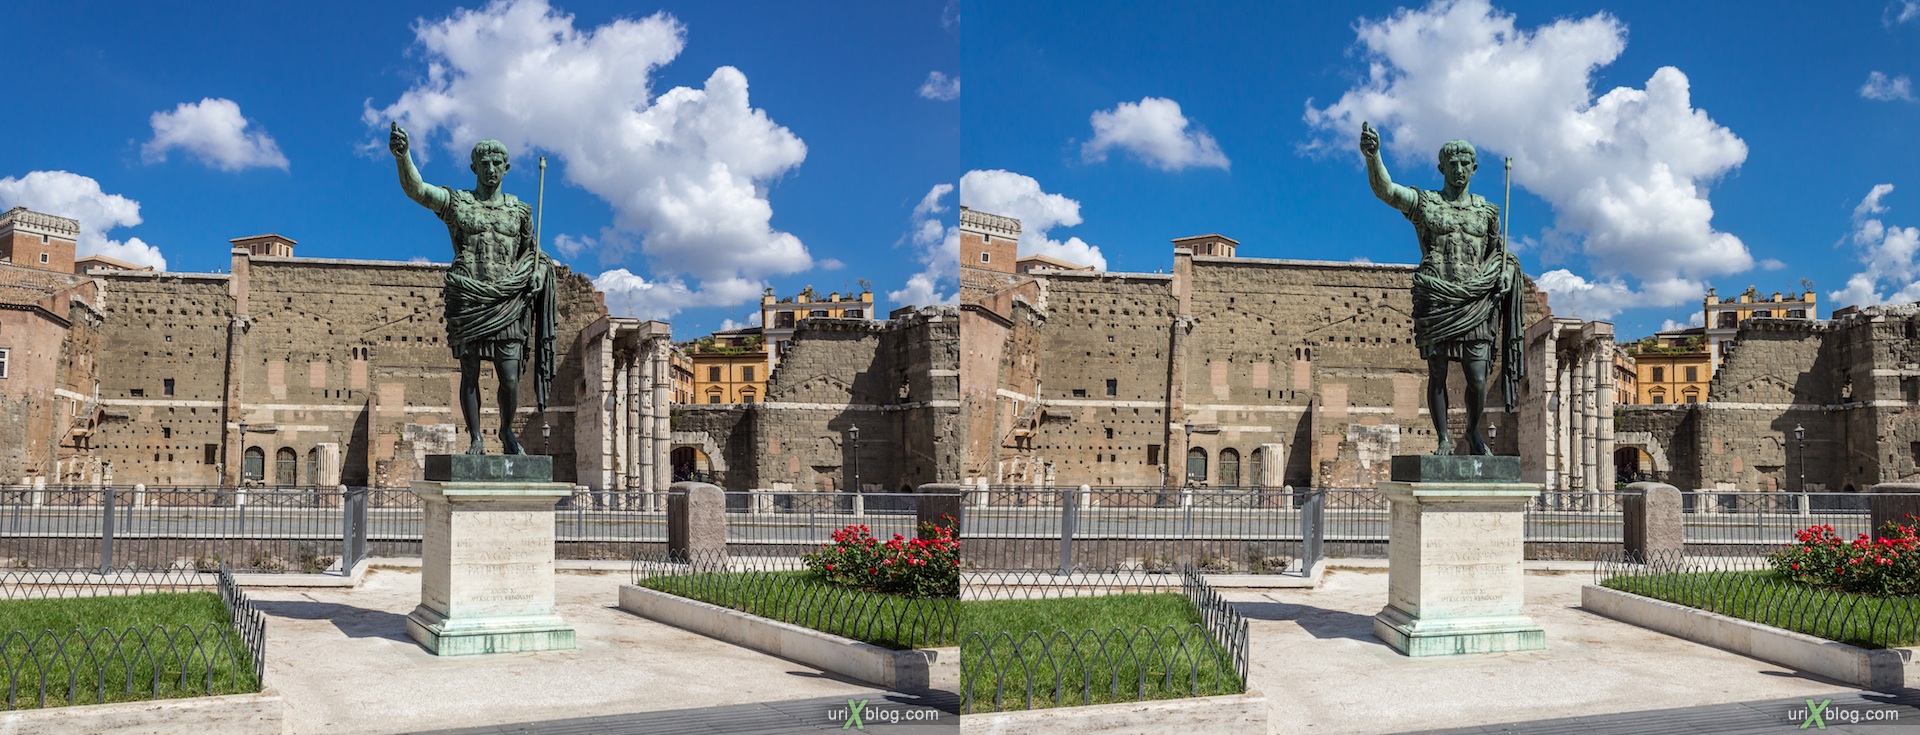 2012, форум Траяна, Roman Forum, Palatine Hill, Rome, Italy, ancient rome, city, 3D, stereo pair, cross-eyed, crossview, cross view stereo pair